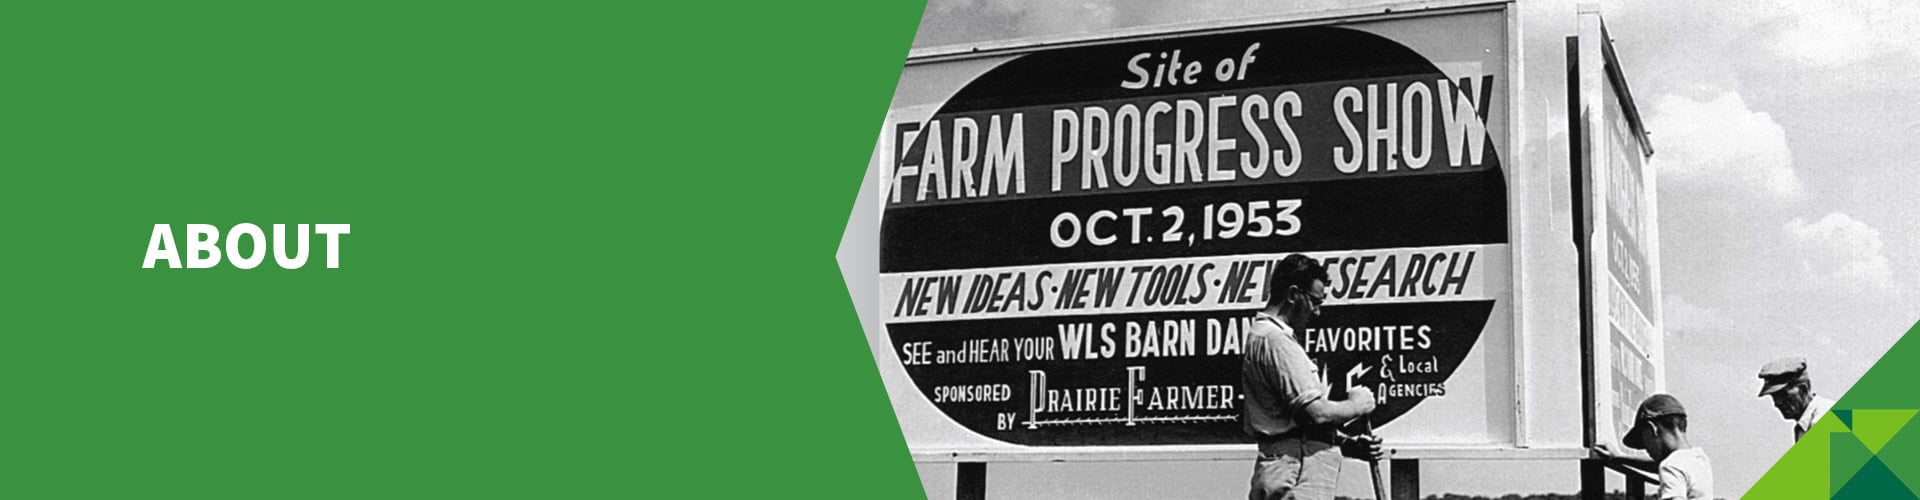 About Farm Progress Show